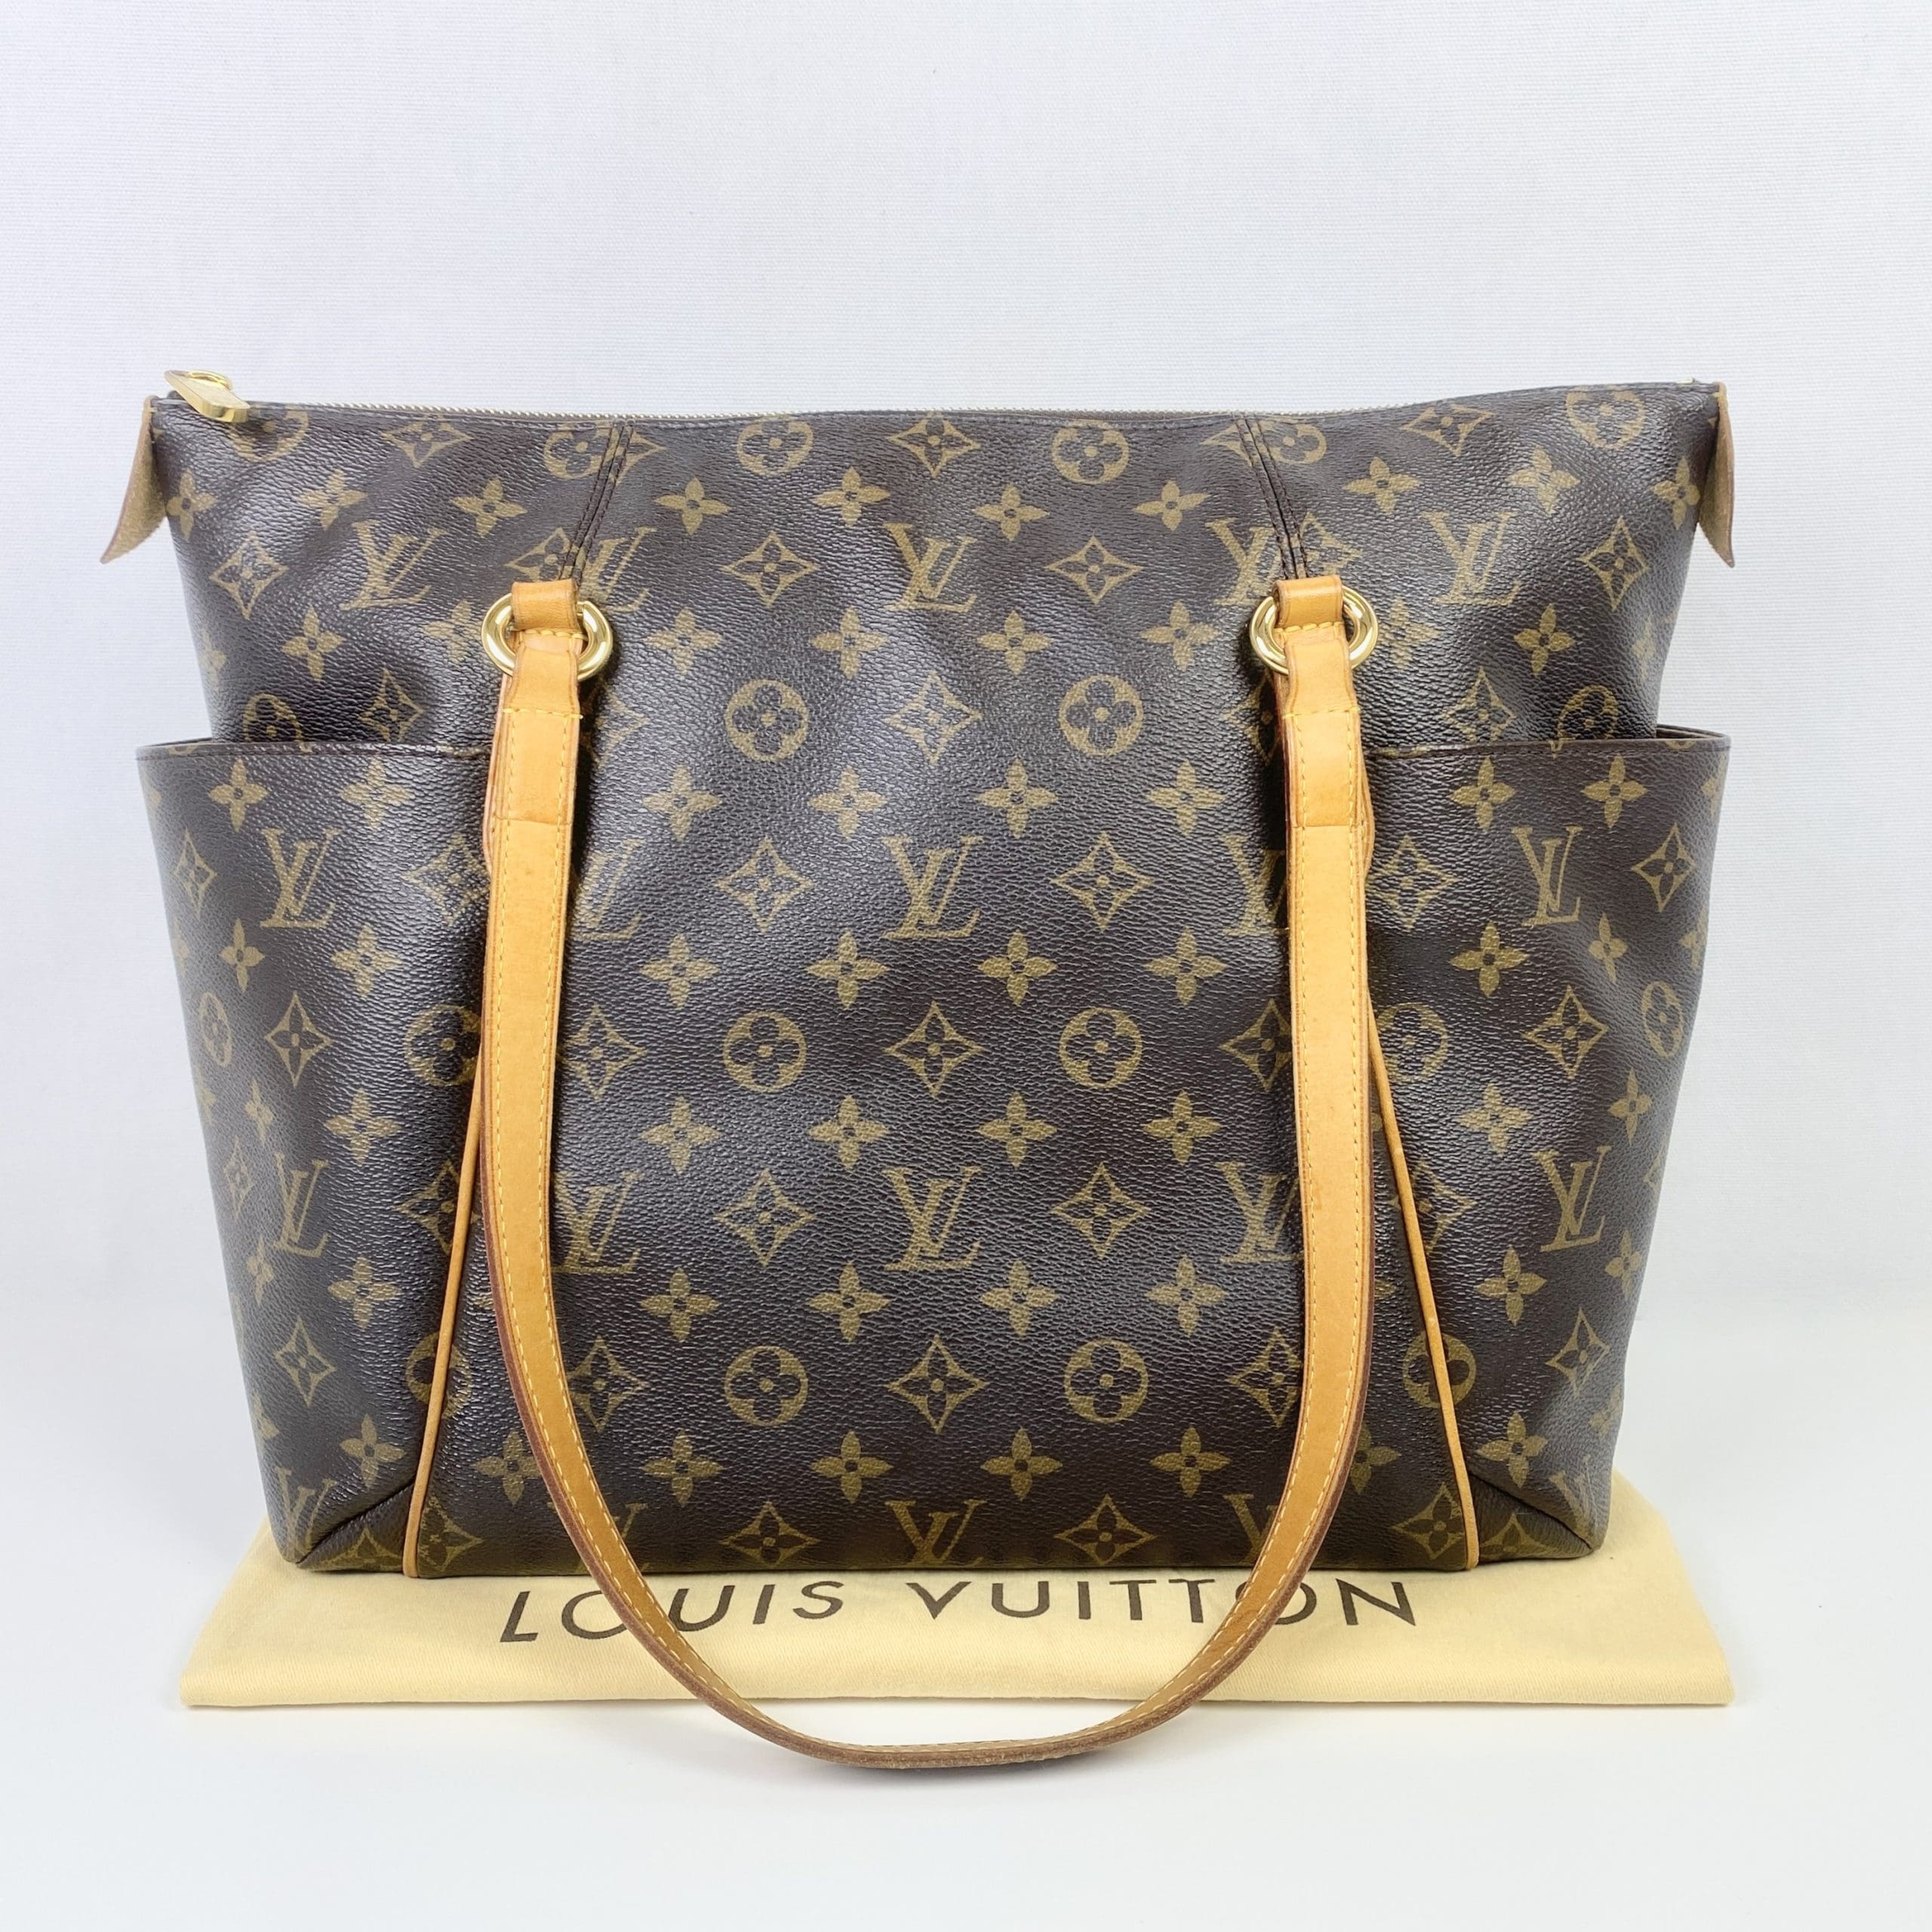 Louis Vuitton, Bags, Beautiful Lv Totally Mm Monogram